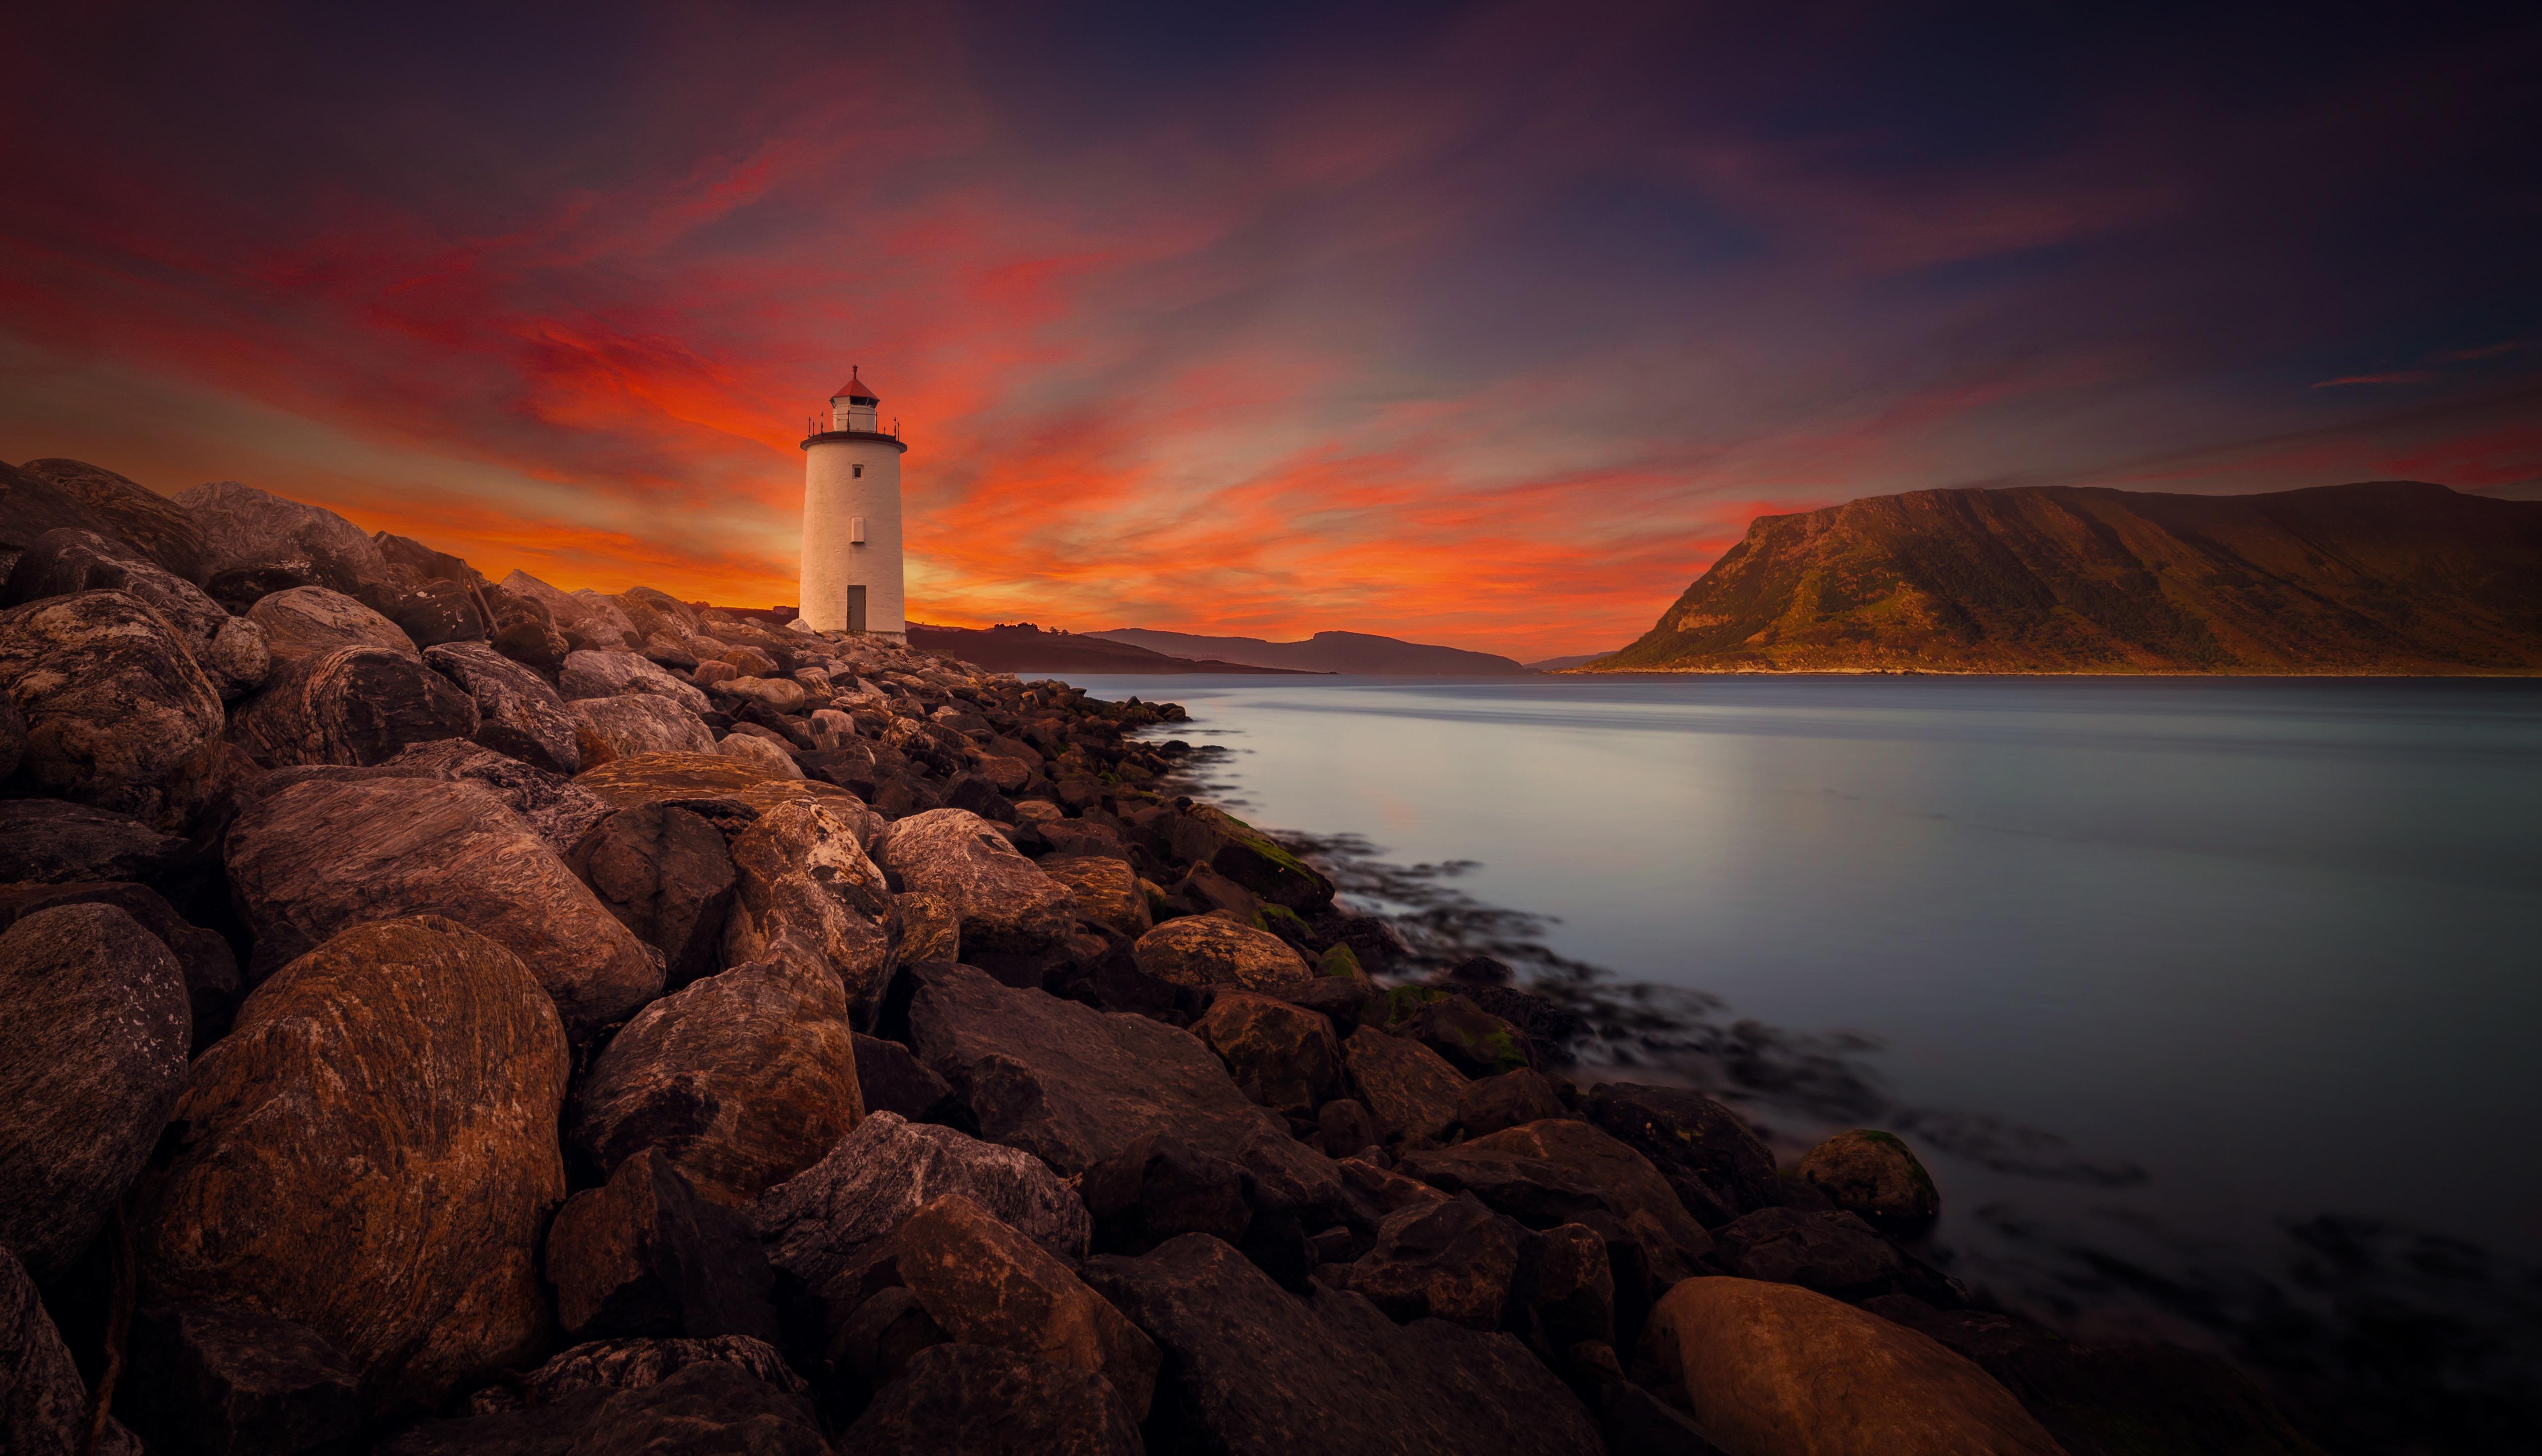 #Rocky shore, #Twilight, K, #Lighthouse, #Sunset. World